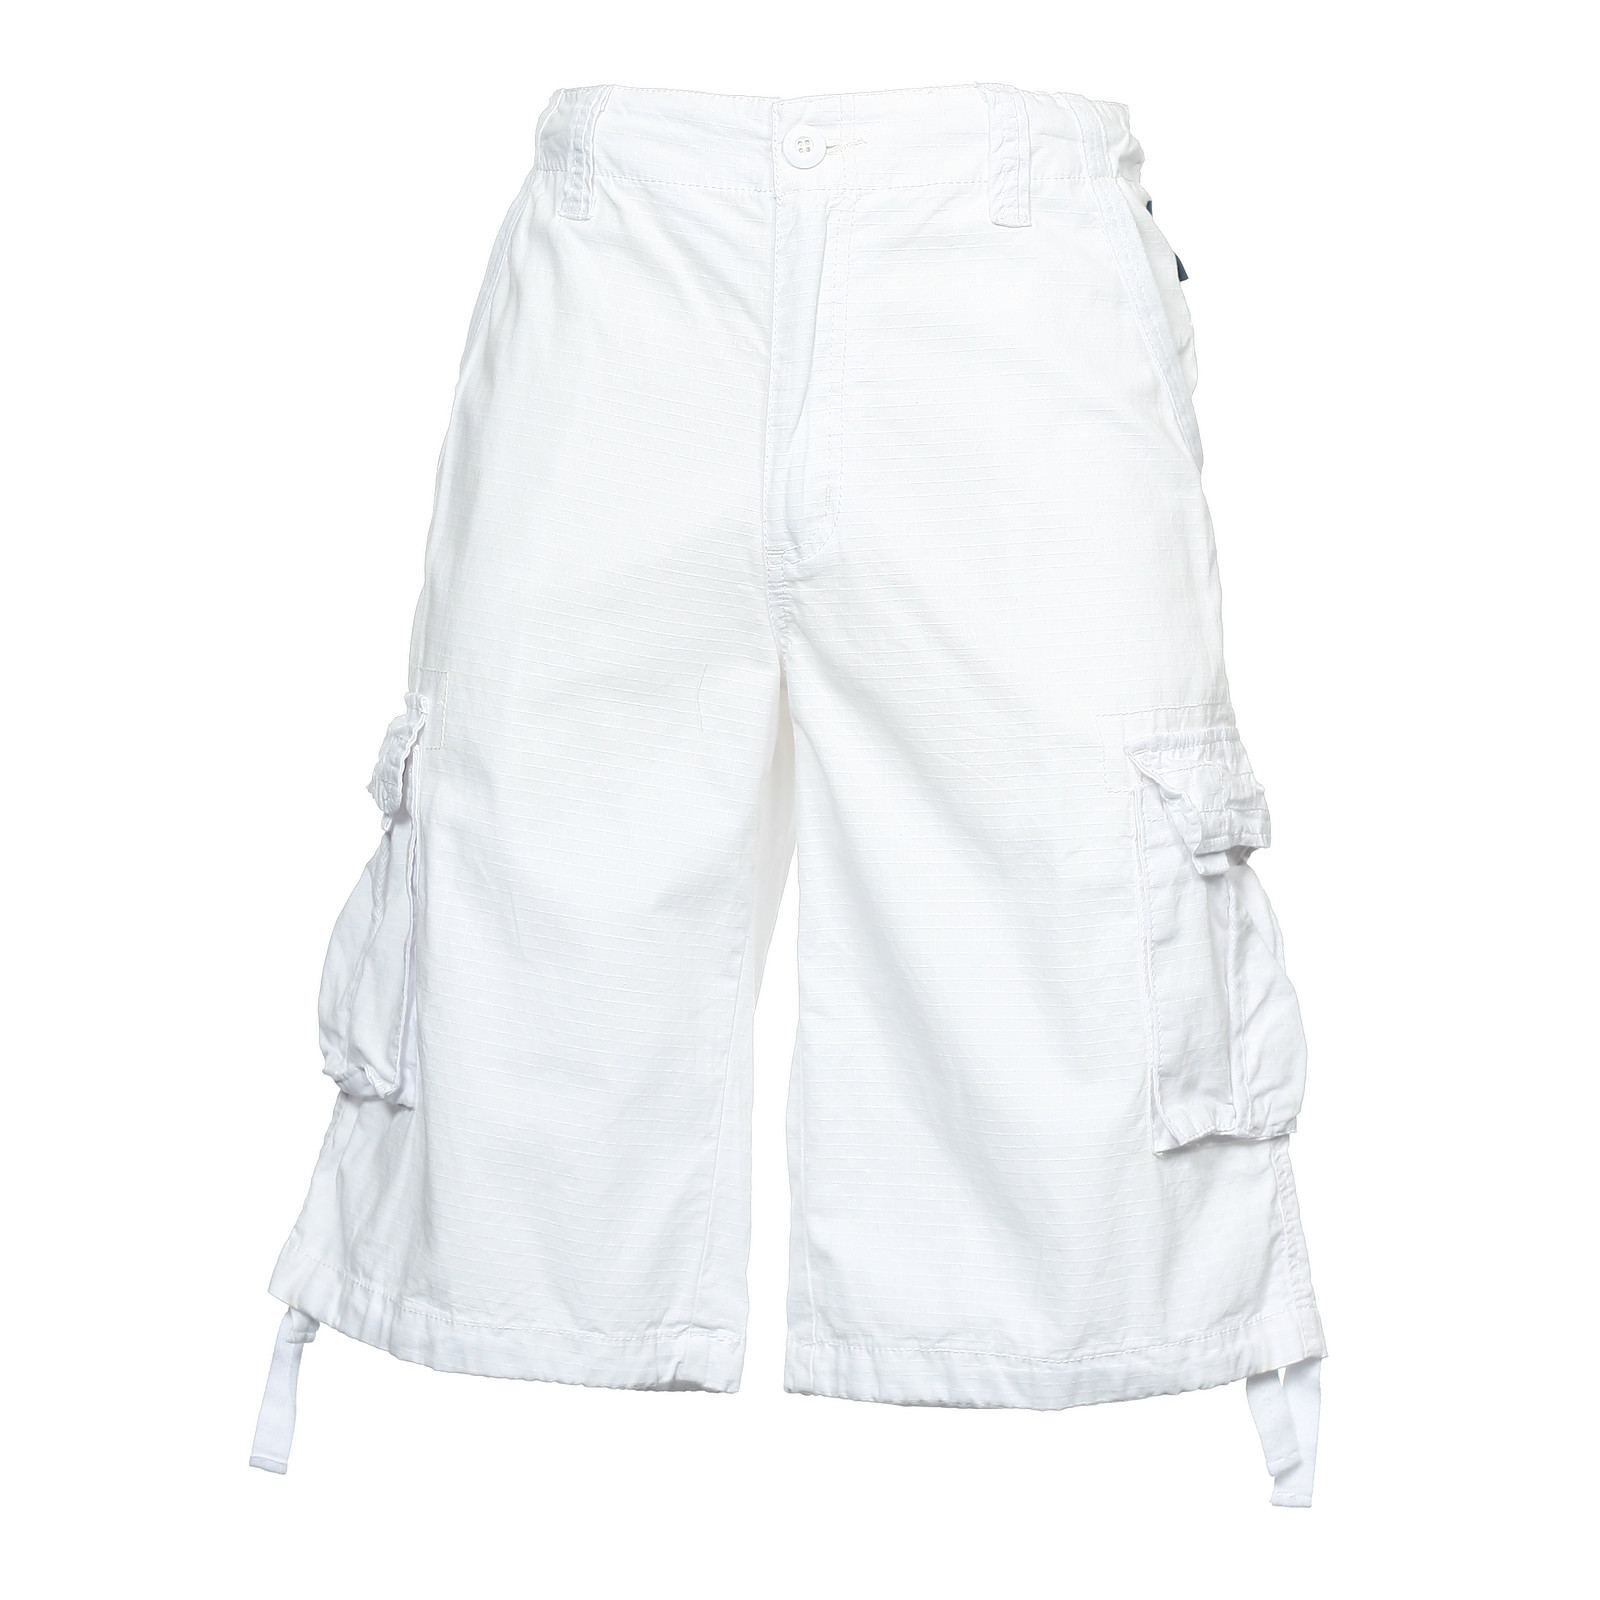 Ecko Unltd Unlimited Men's Bleach White Cotton Utility Cargo Shorts